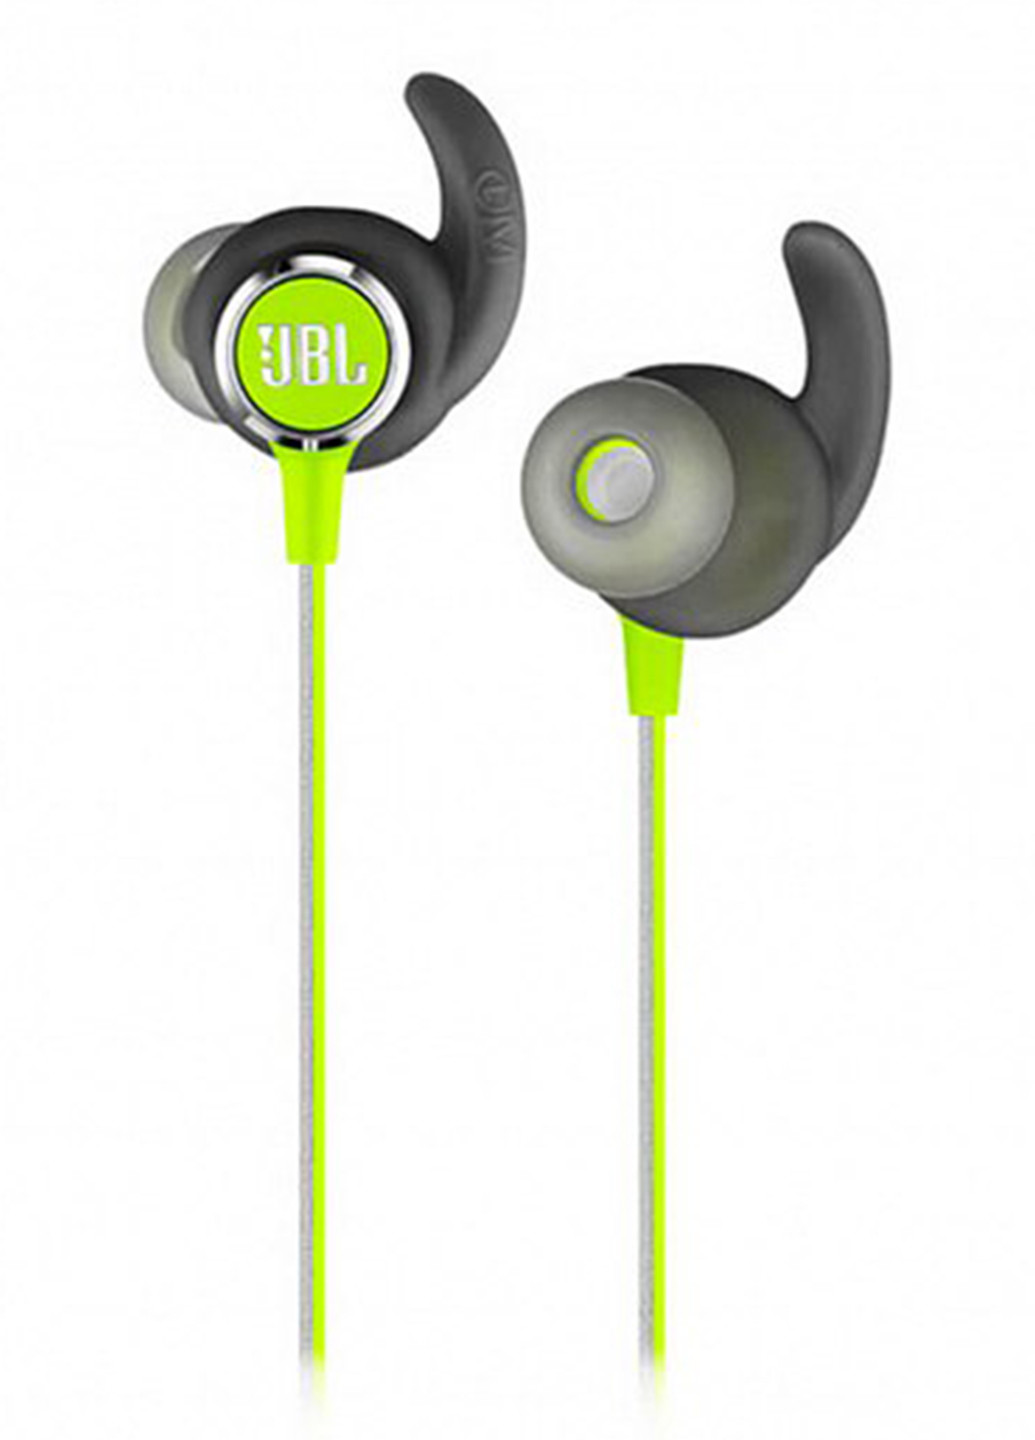 Наушники In-Ear Headphone Reflect Mini 2 BT Green (GRN) JBL refmini2 (131629223)